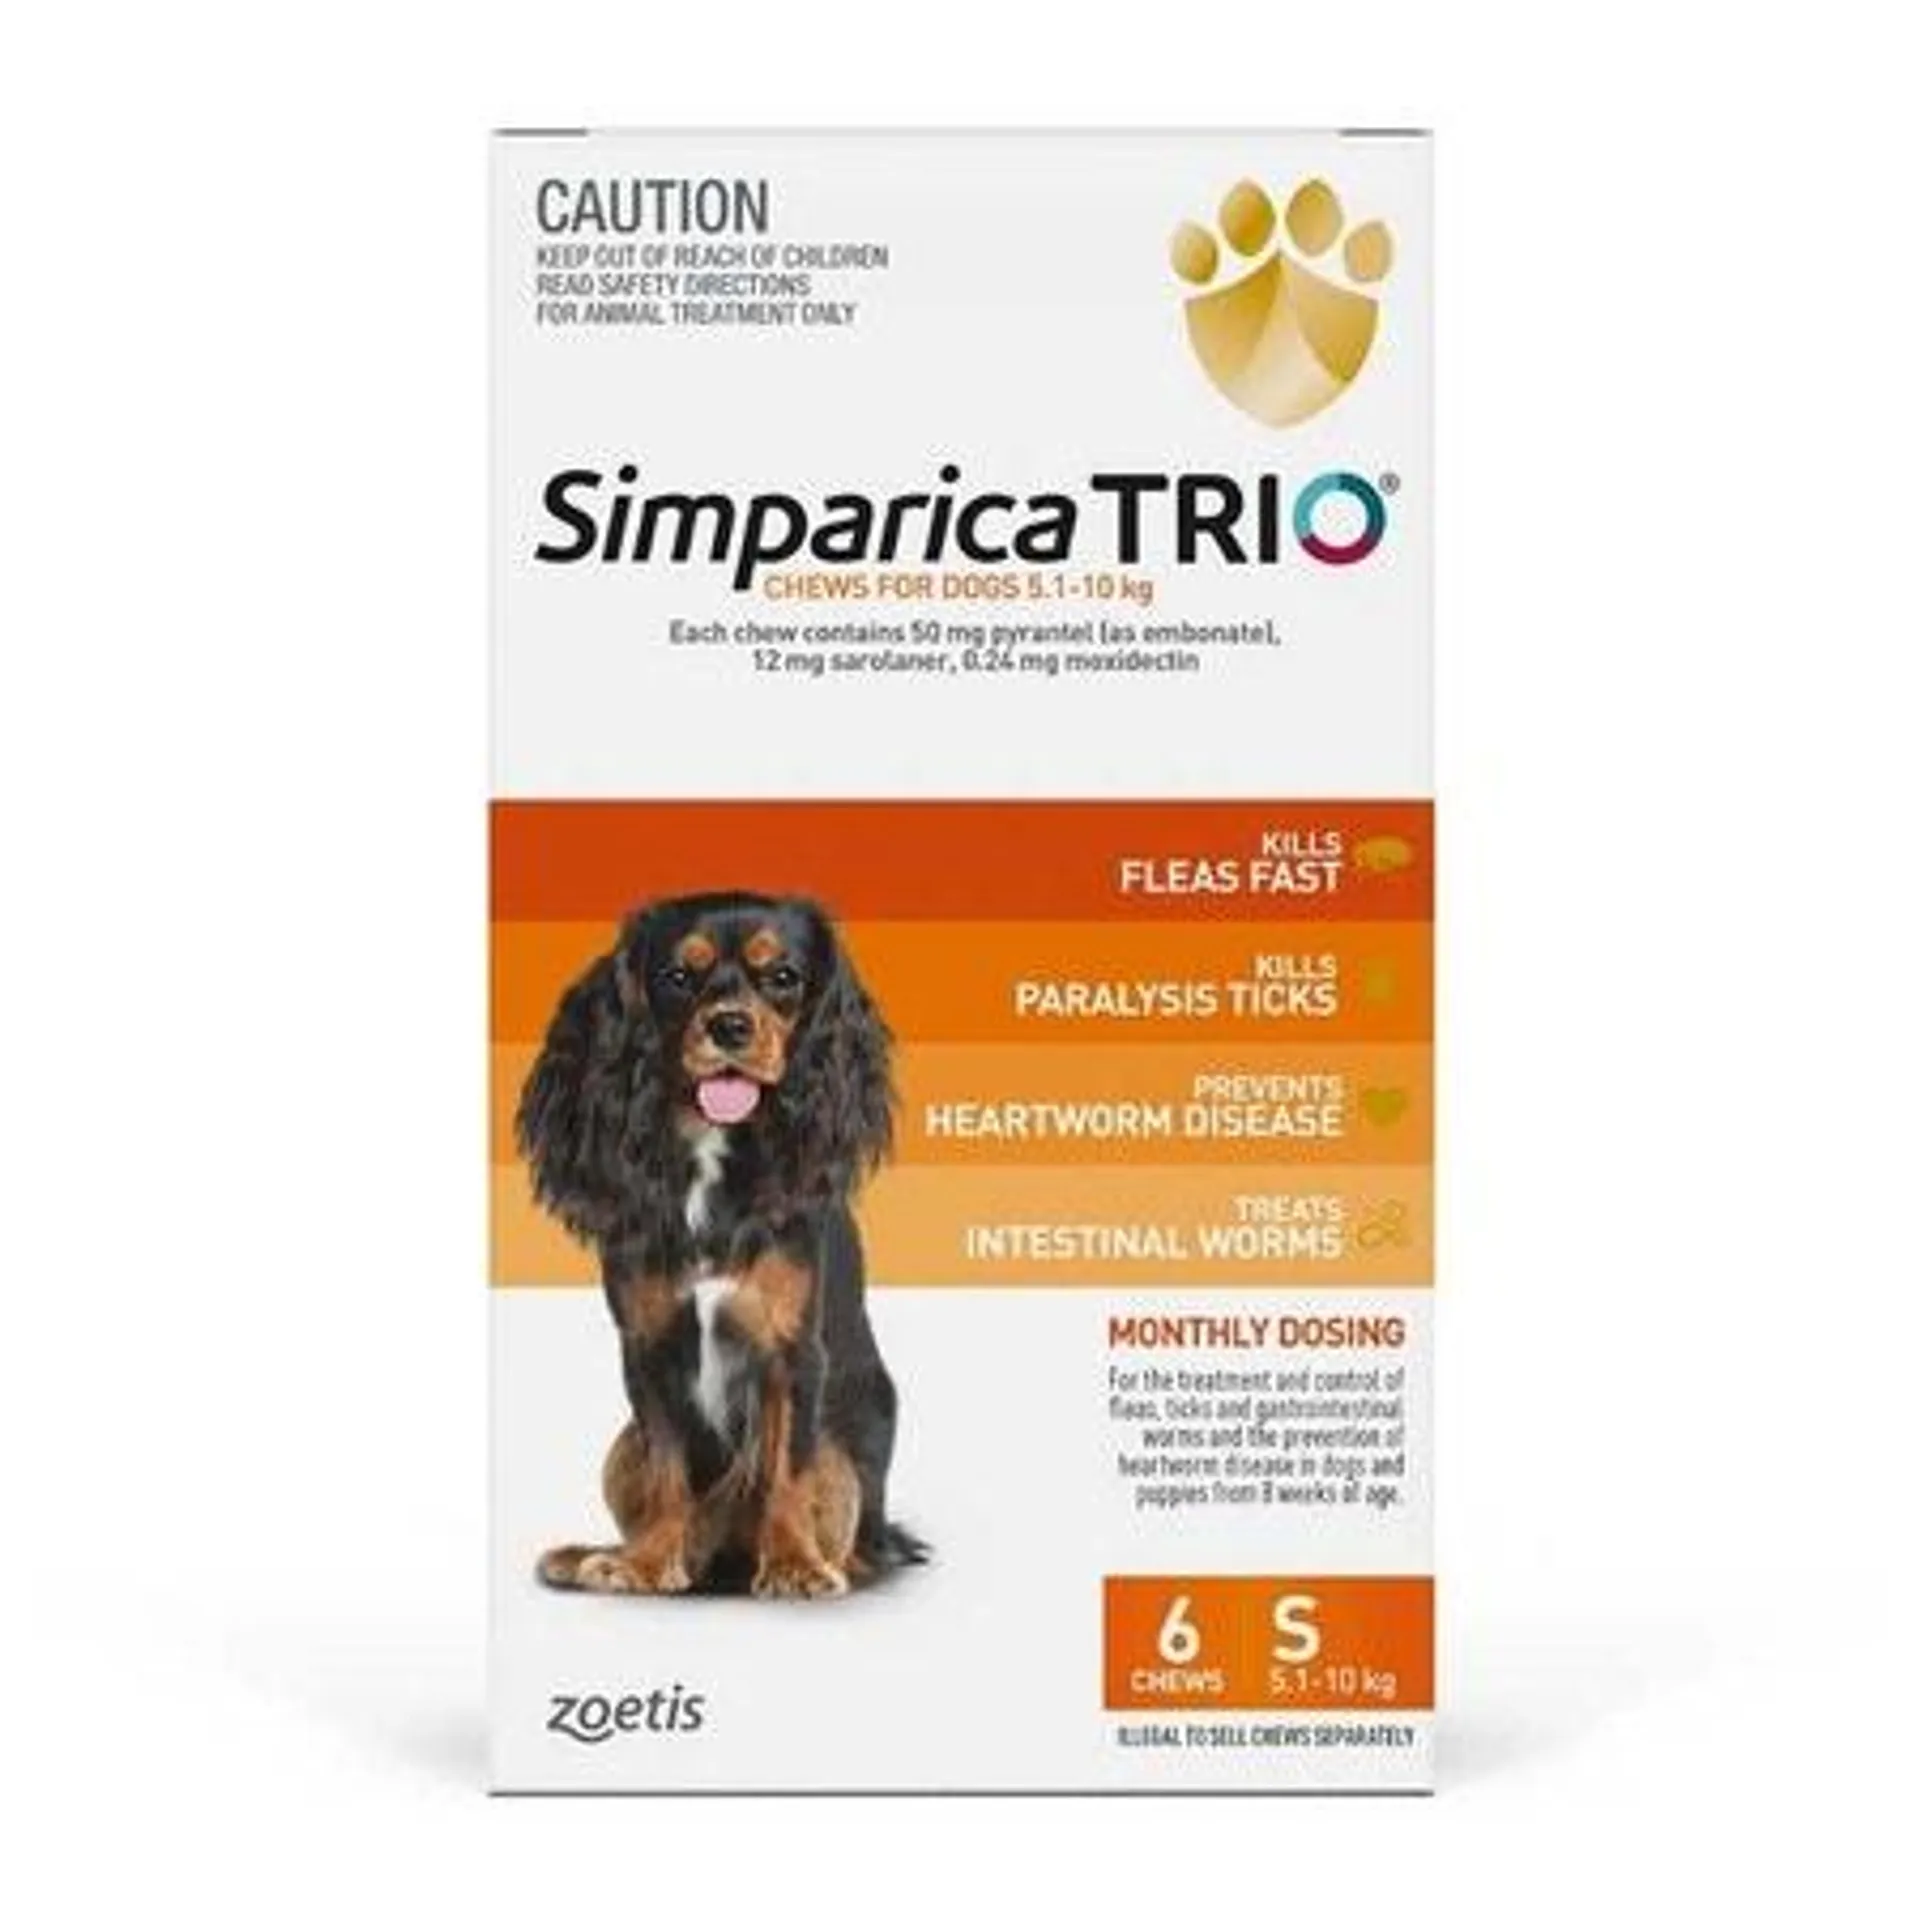 Simparica Trio 5.1-10kg Dog Flea Tick & Worm Chew